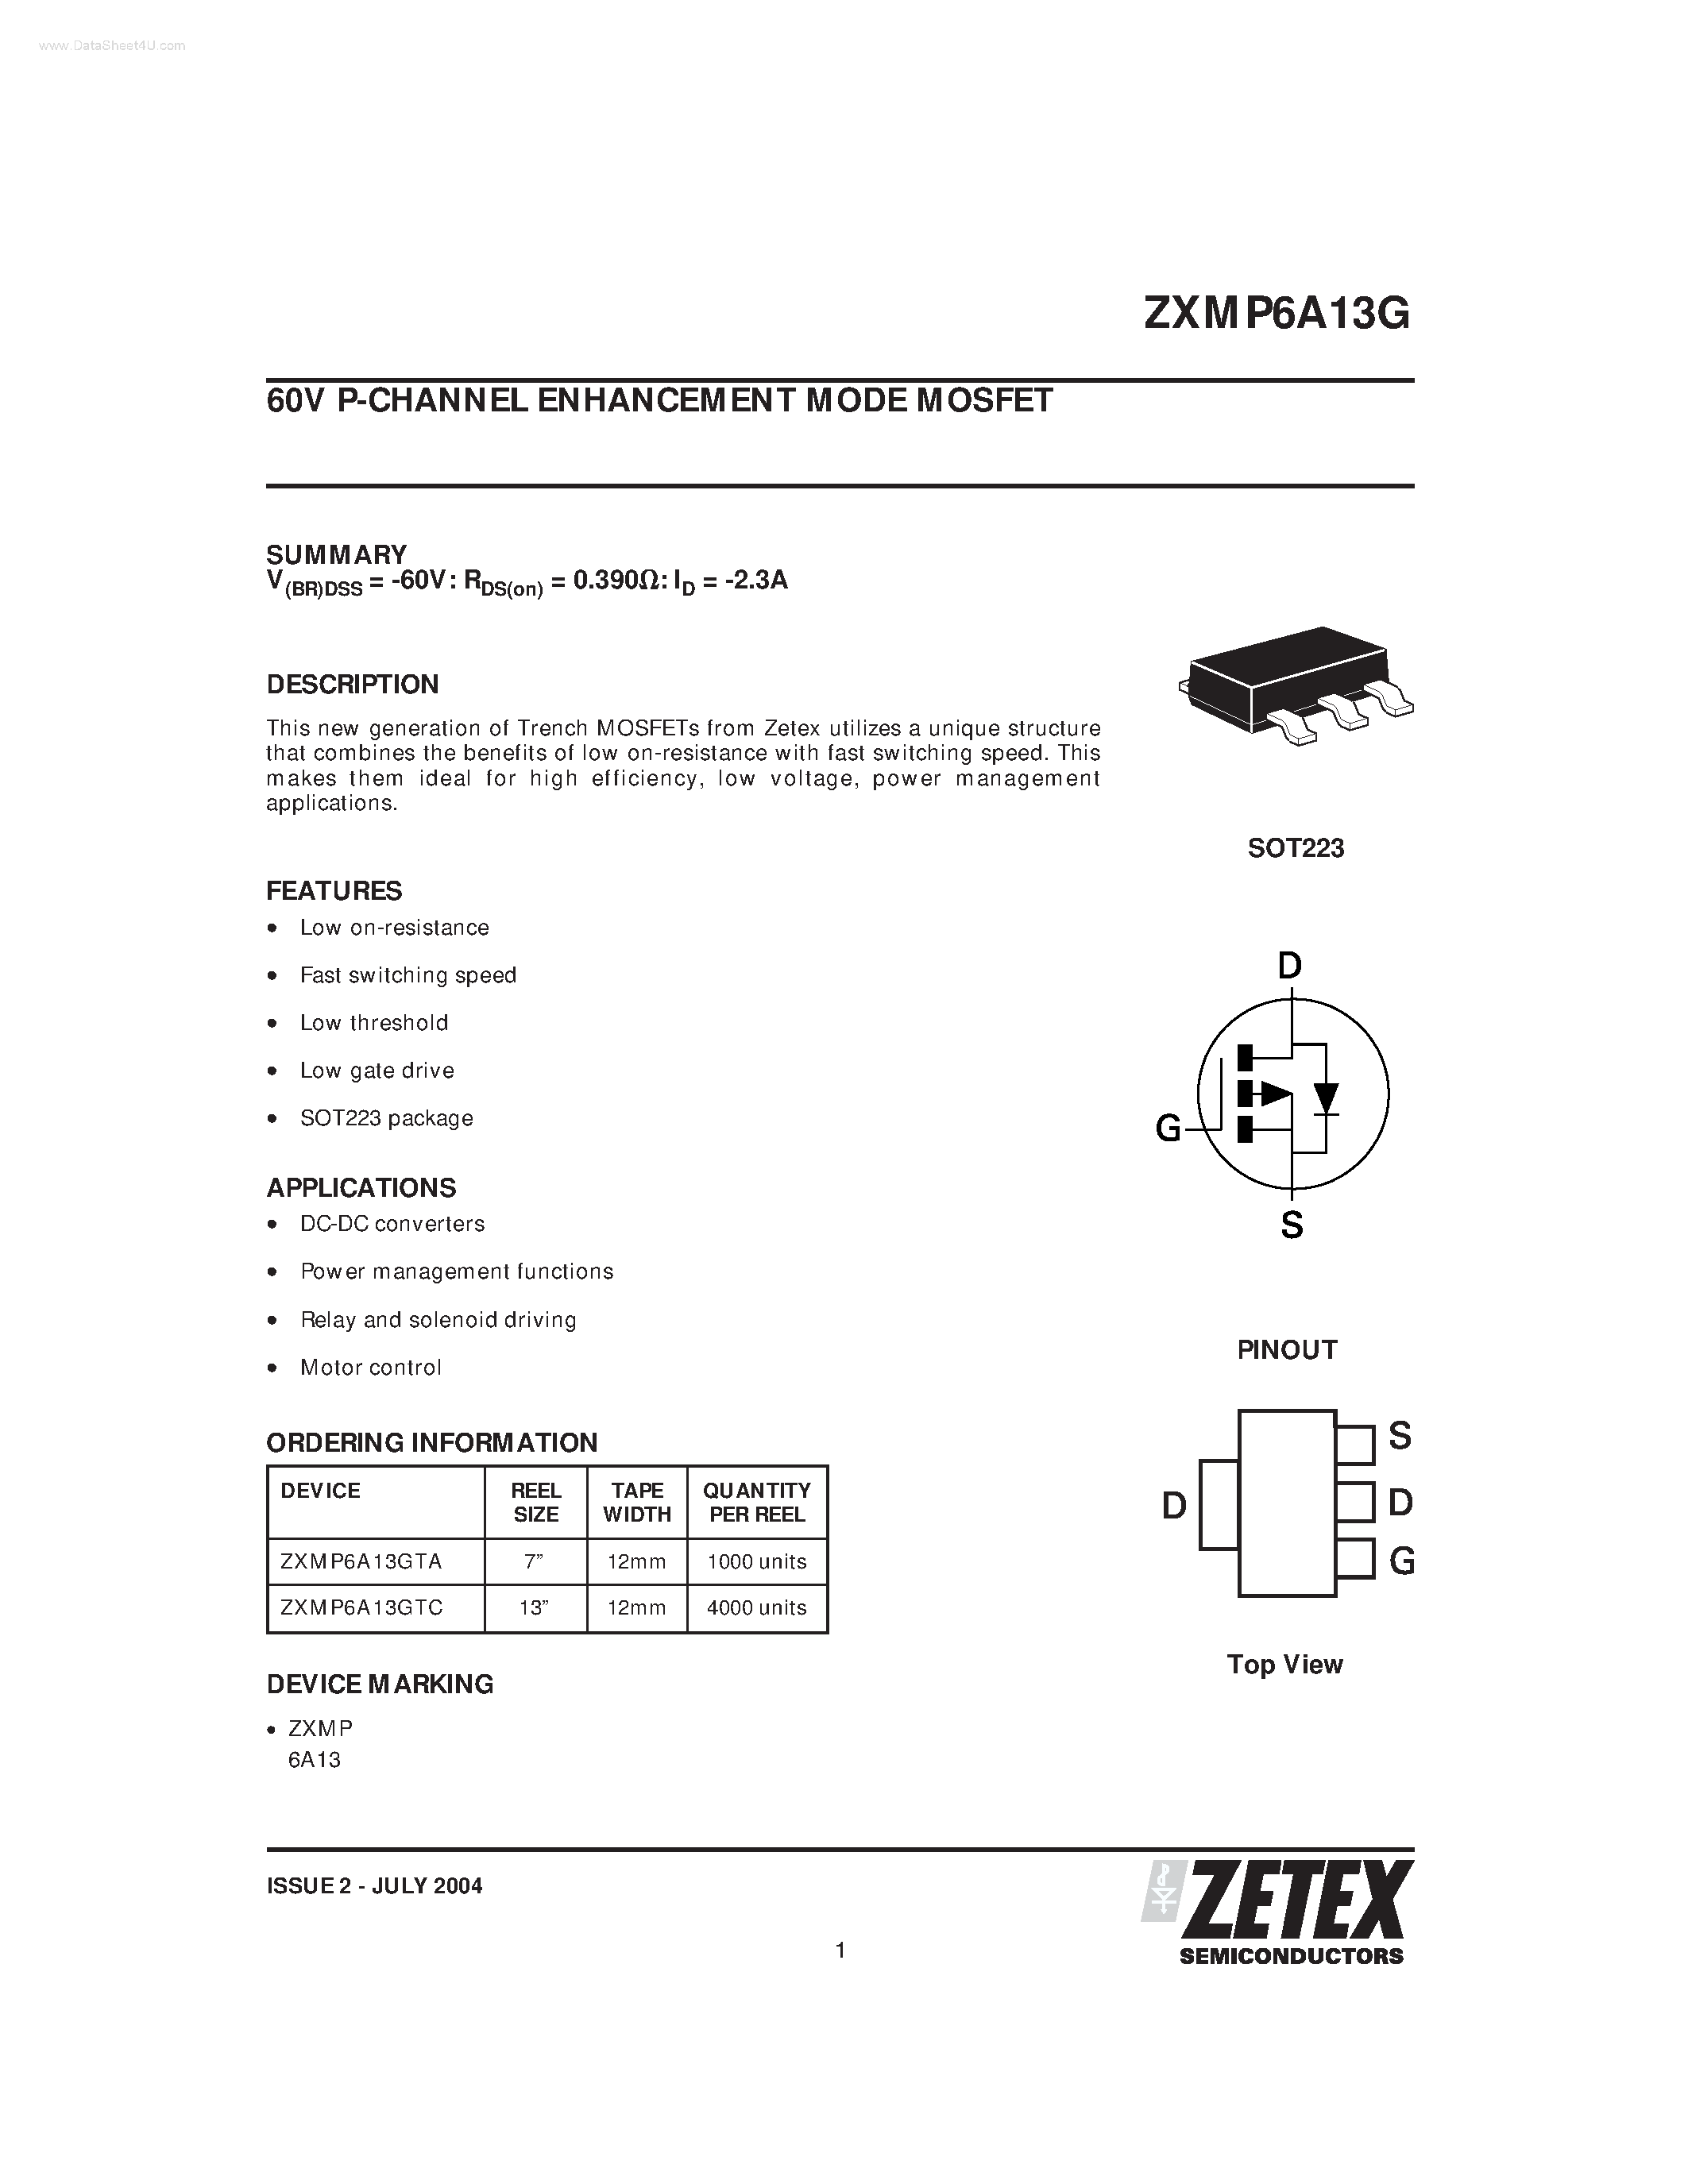 Datasheet ZXMP6A13G - 60V P-CHANNEL ENHANCEMENT MODE MOSFET page 1